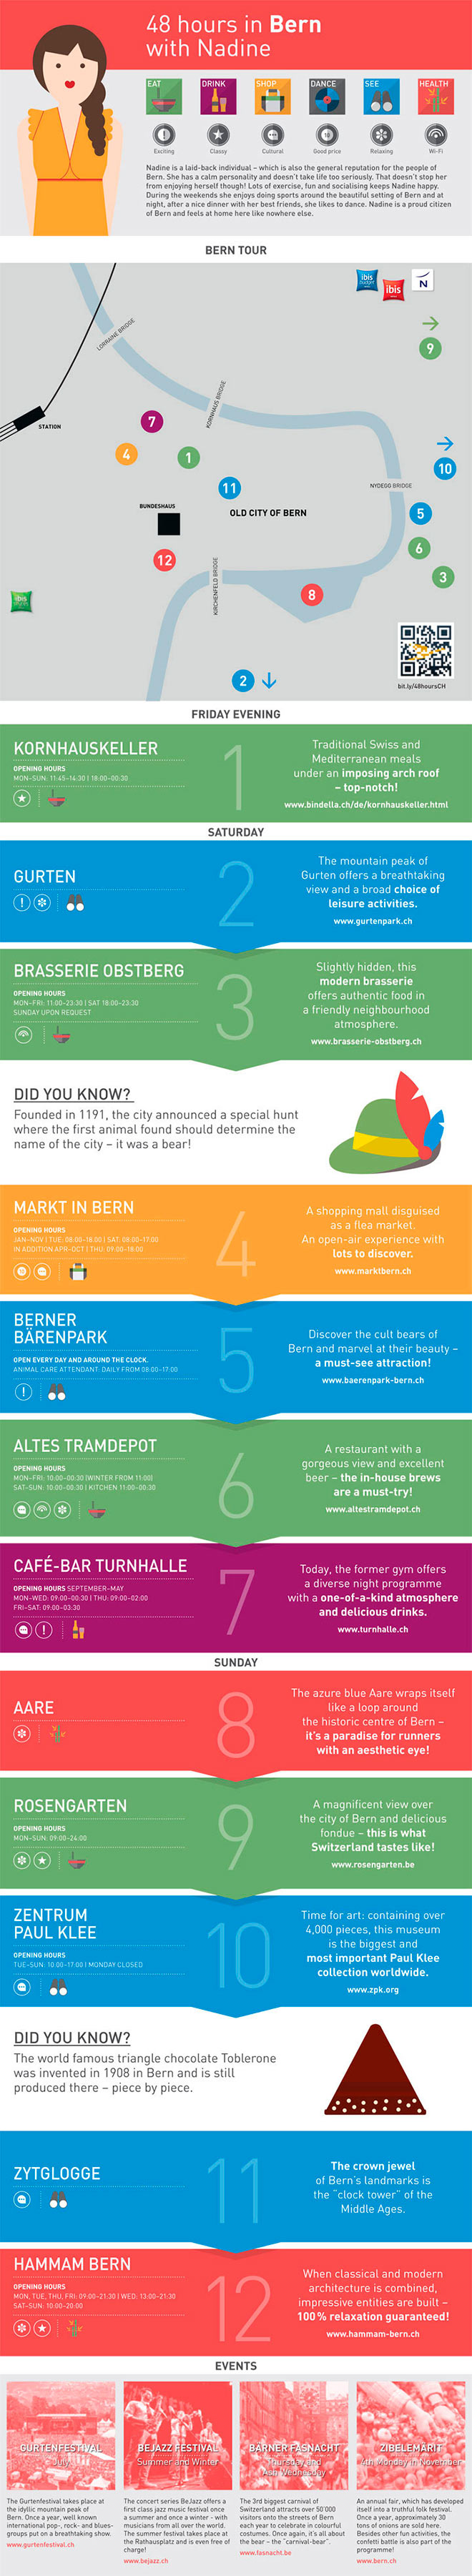 Bern Infographic